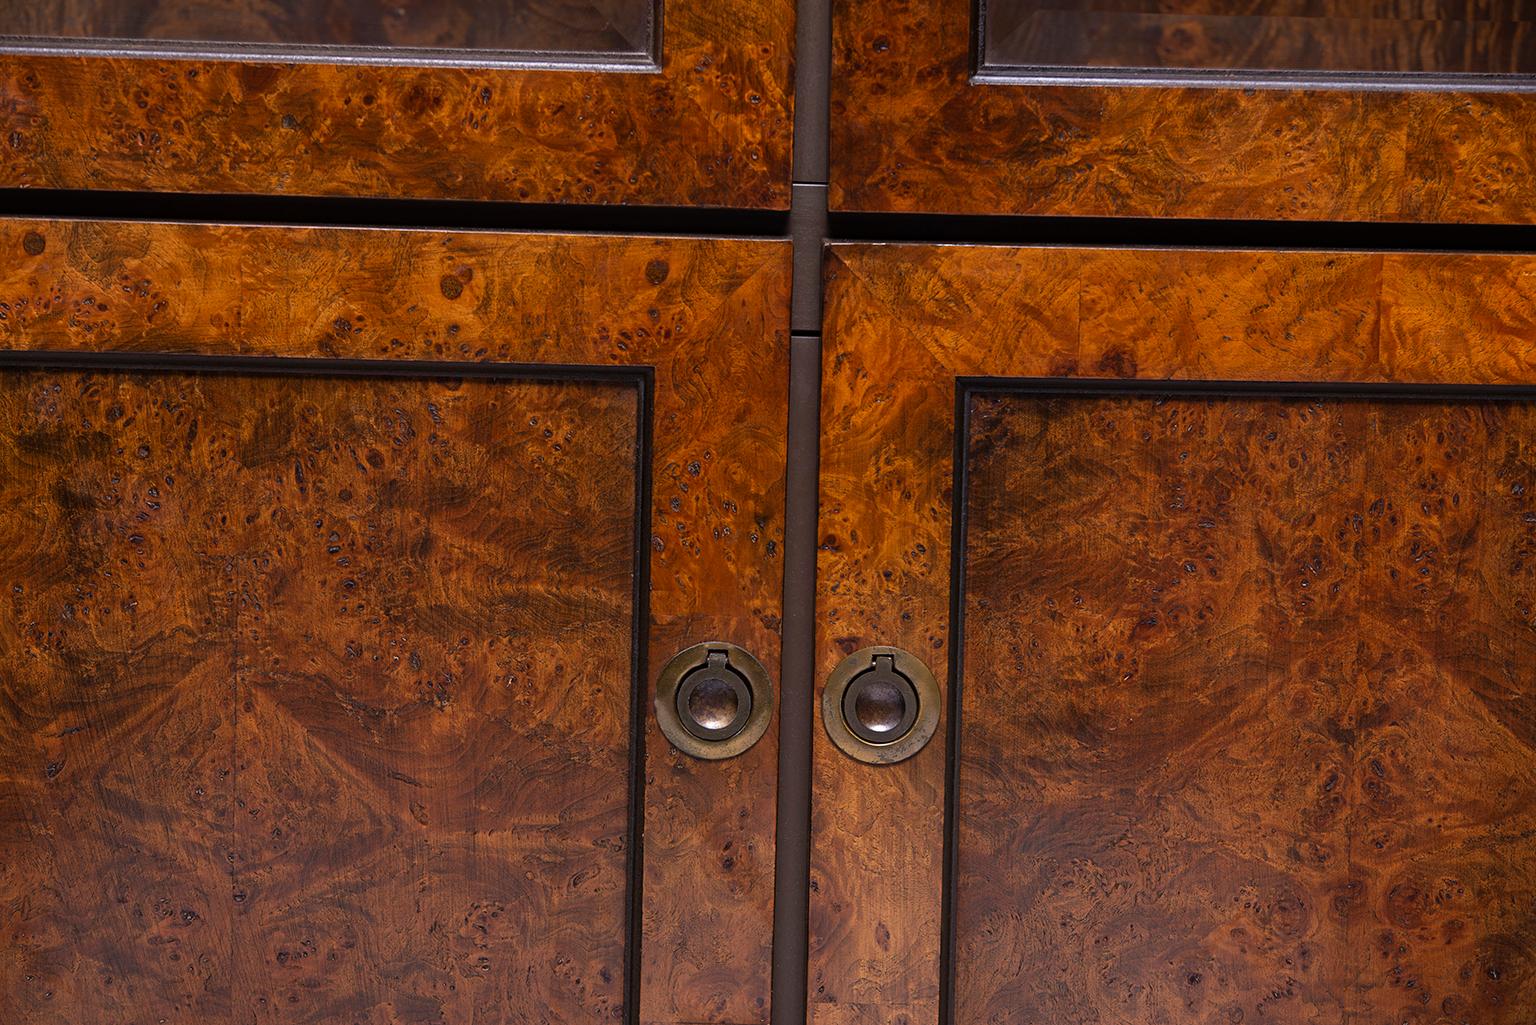 Widdicomb Midcentury Burled Olive Wood Cabinet with Glass Doors 1